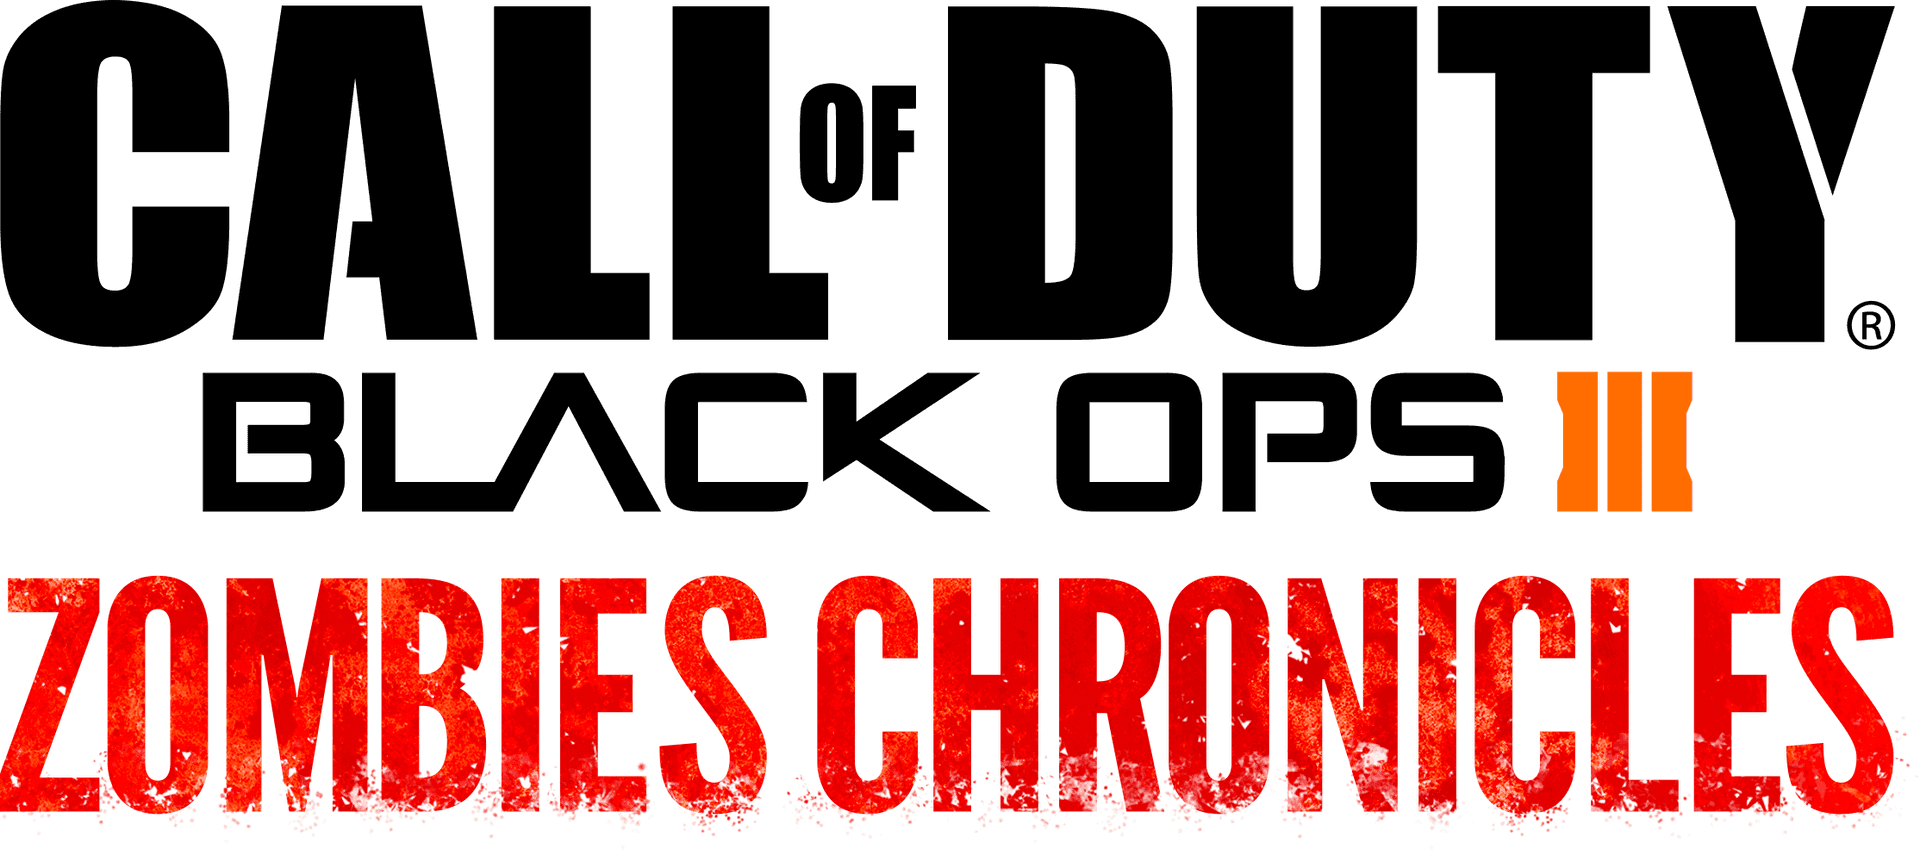 Callof Duty Black Ops I I I Zombies Chronicles Logo PNG